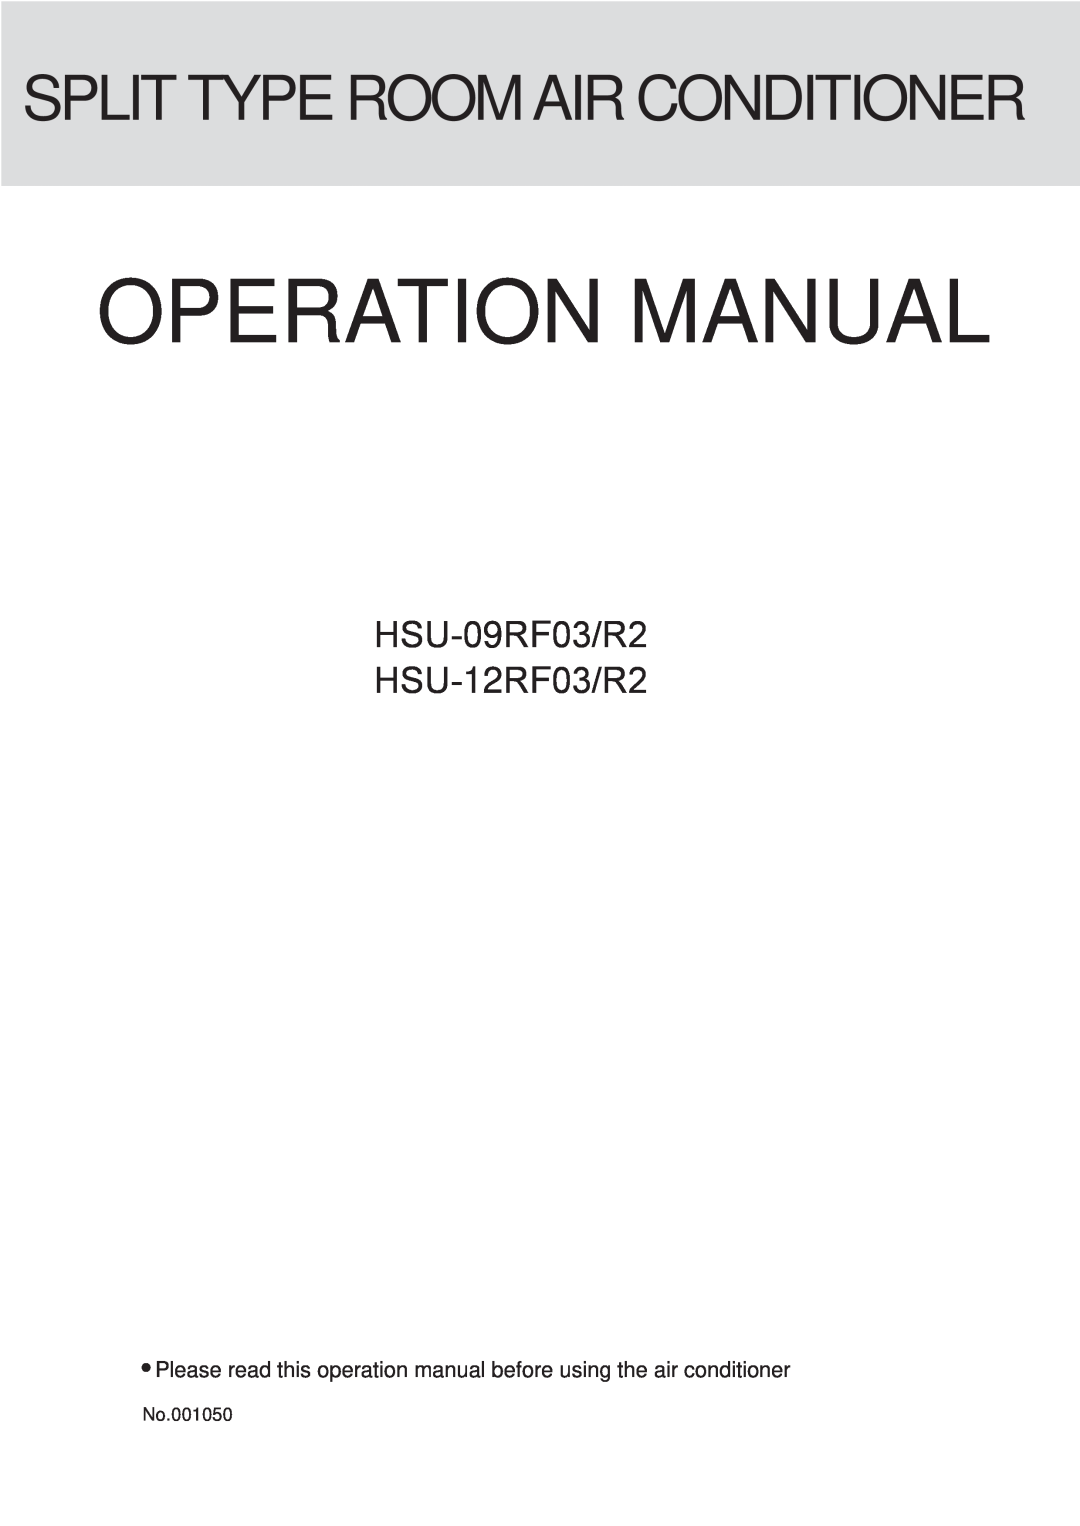 Haier operation manual HSU-09RF03/R2 HSU-12RF03/R2, Split Type Room Air Conditioner 